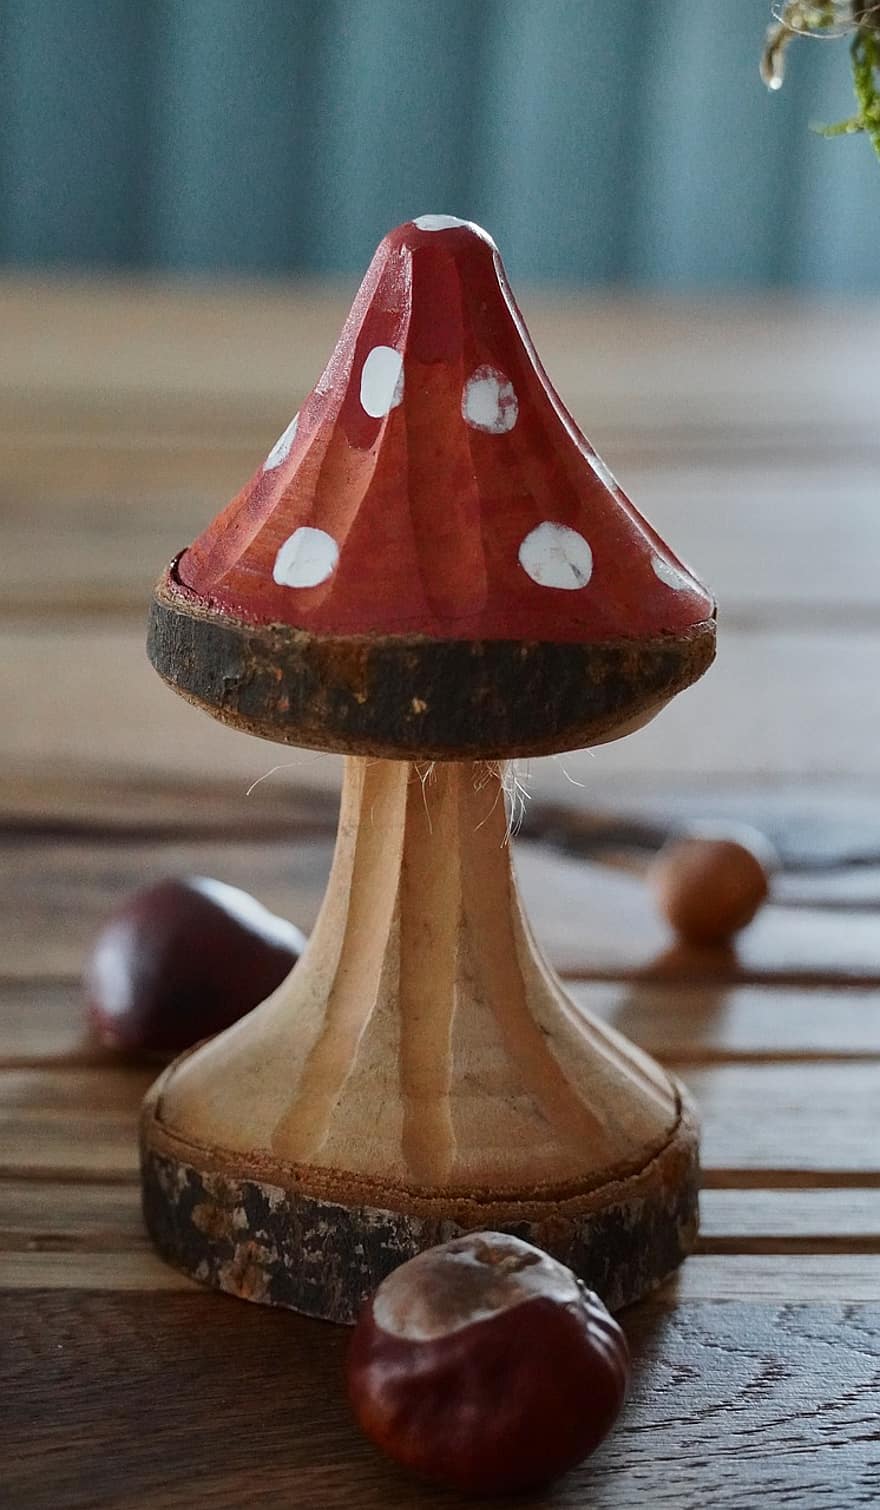 Mushroom, Mushroom Decor, Chestnut Wood, wood, close-up, season, single object, autumn, backgrounds, food, decoration